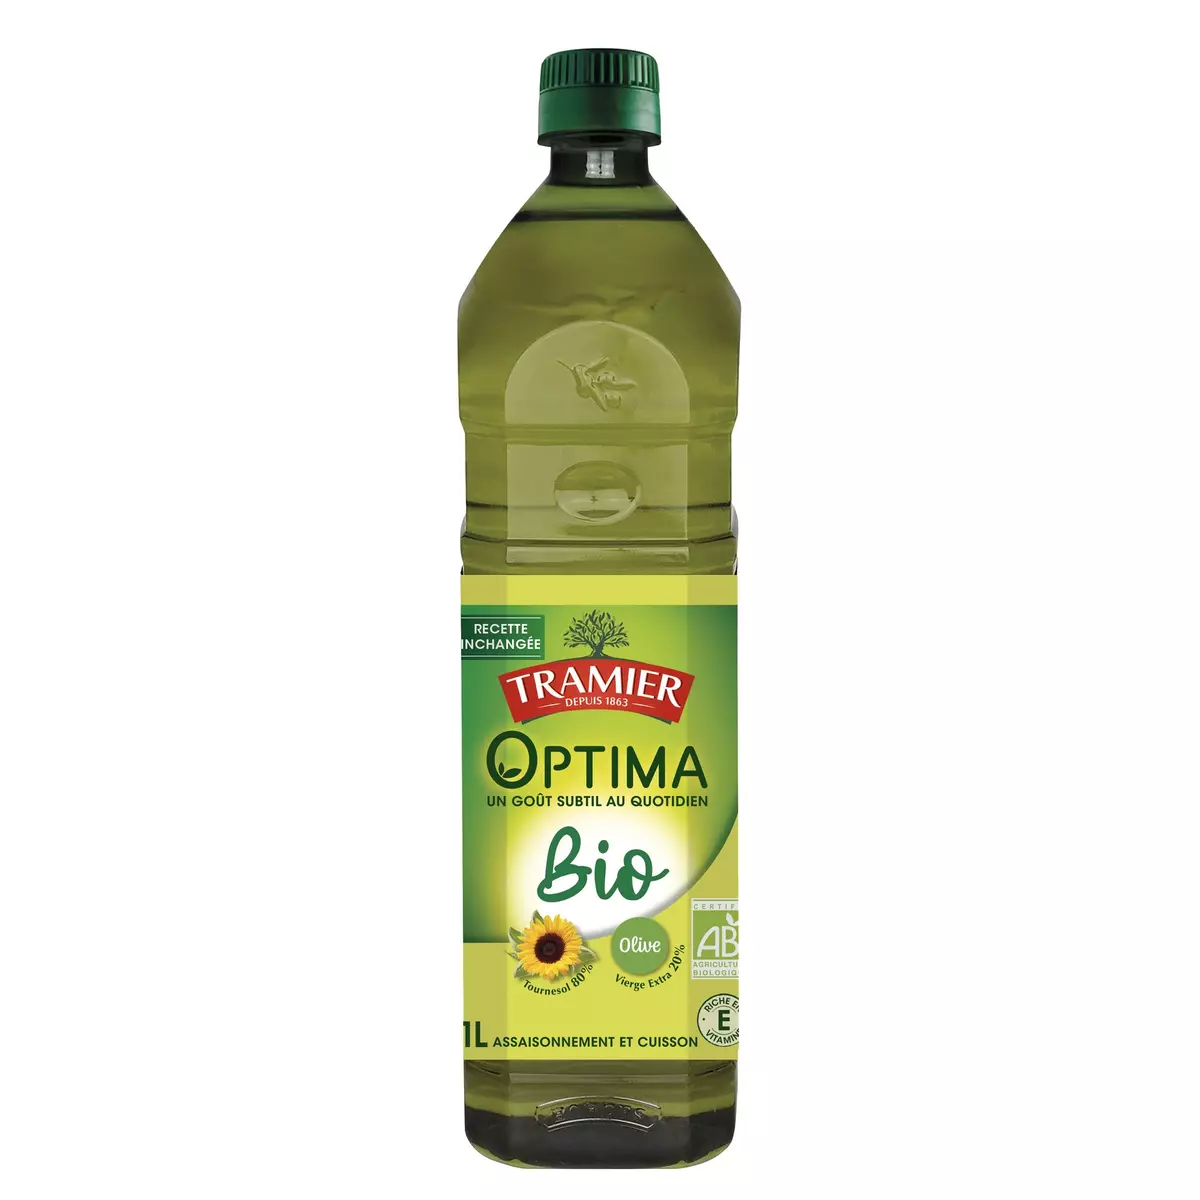 TRAMIER Optima bio huiles de tournesol et olive 1l